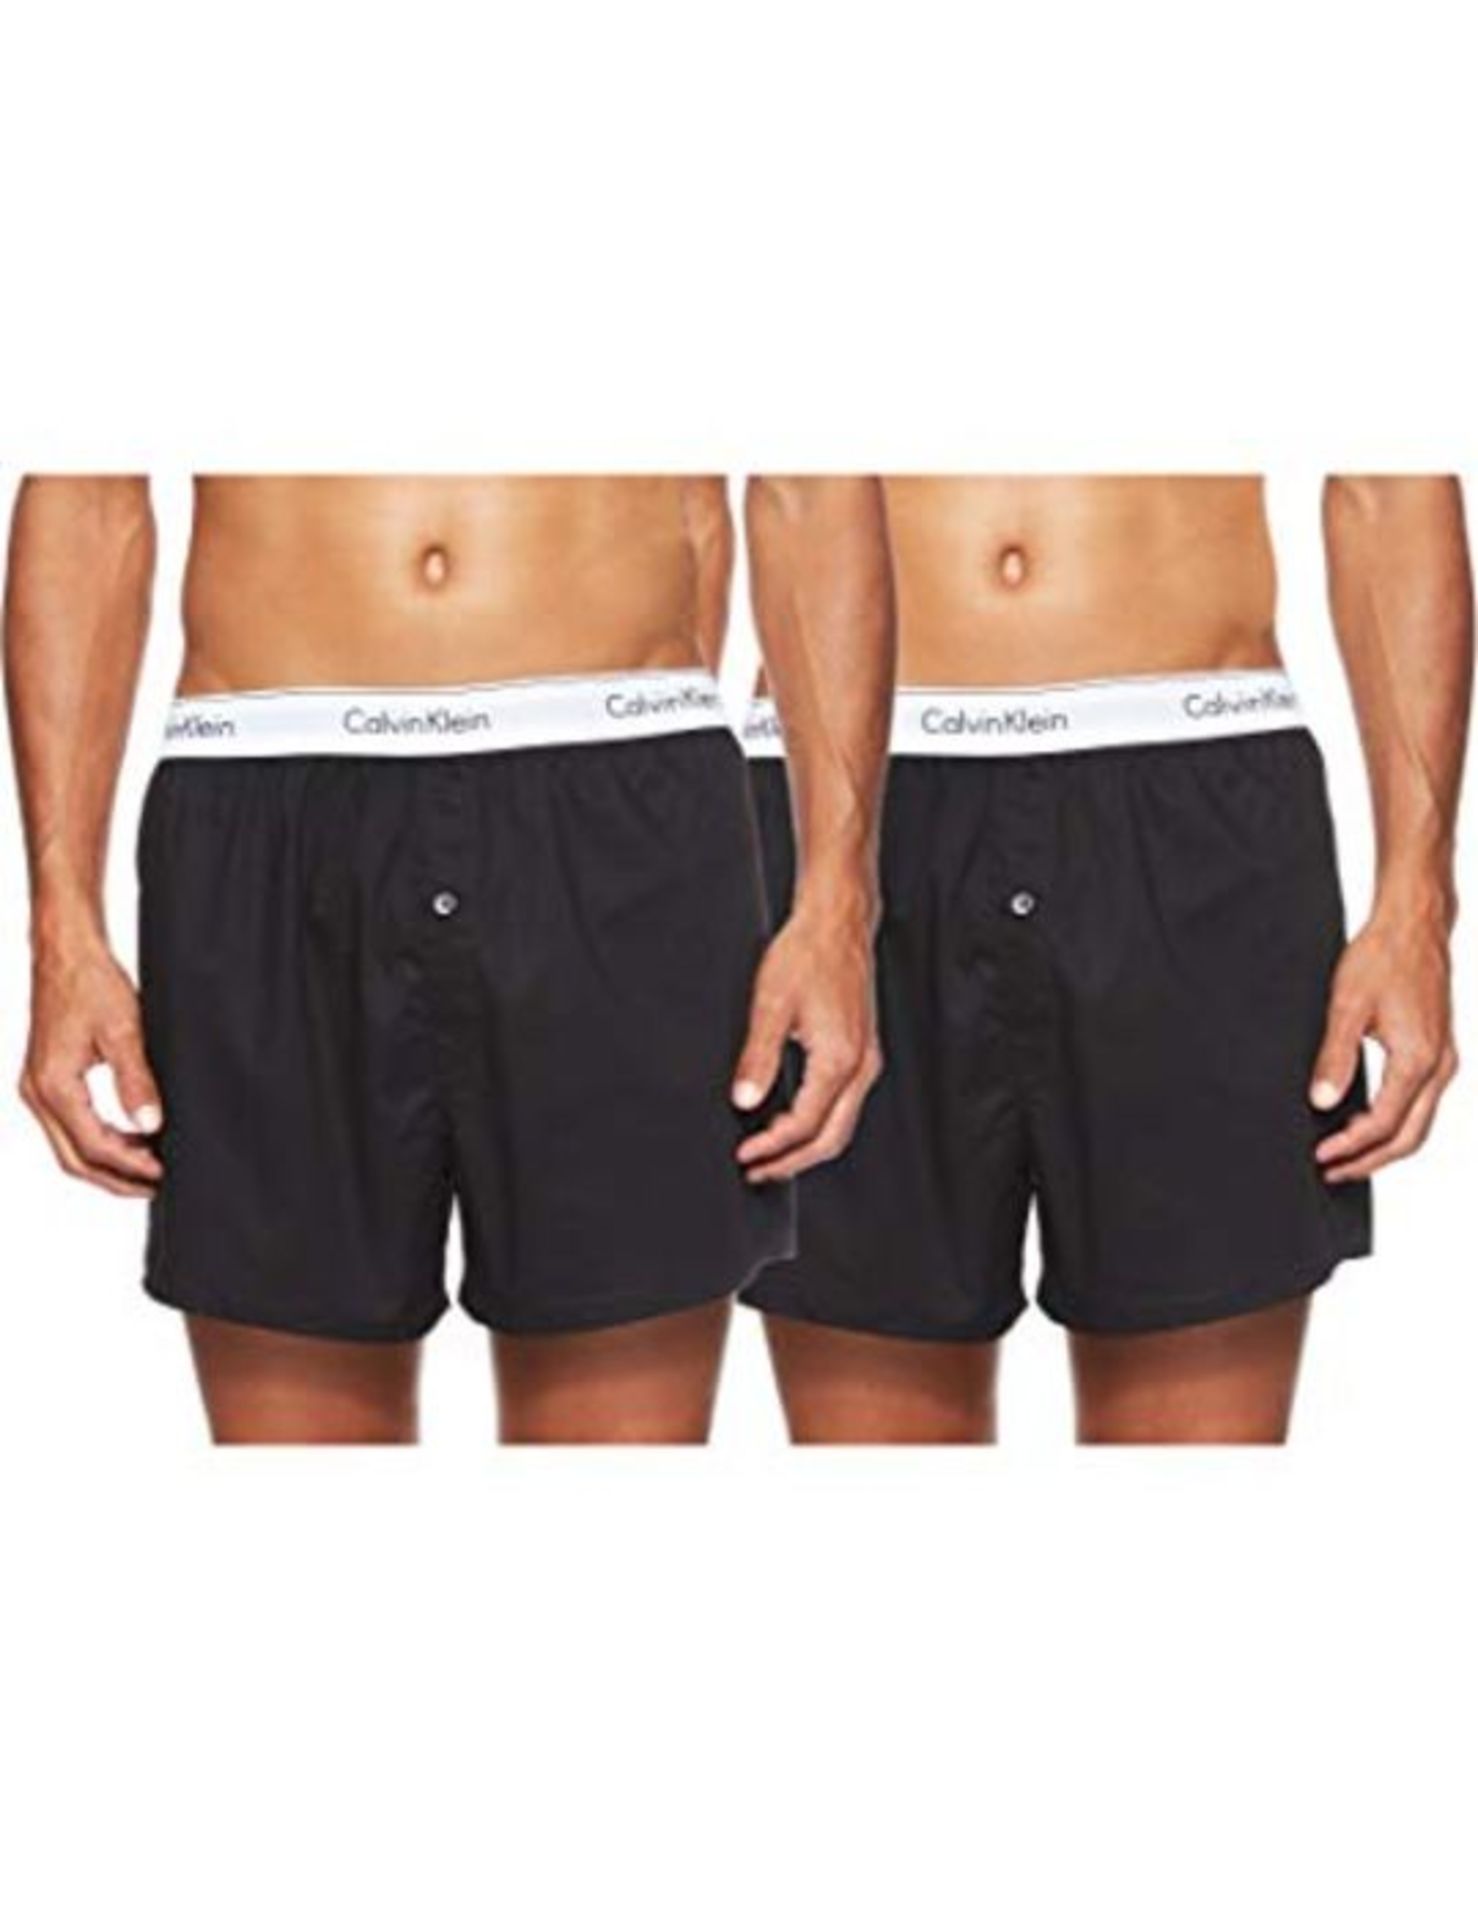 Calvin Klein Men's 2 Pack Slim Fit Boxers, Boxer Shorts,Multicoloured (Black/black), M